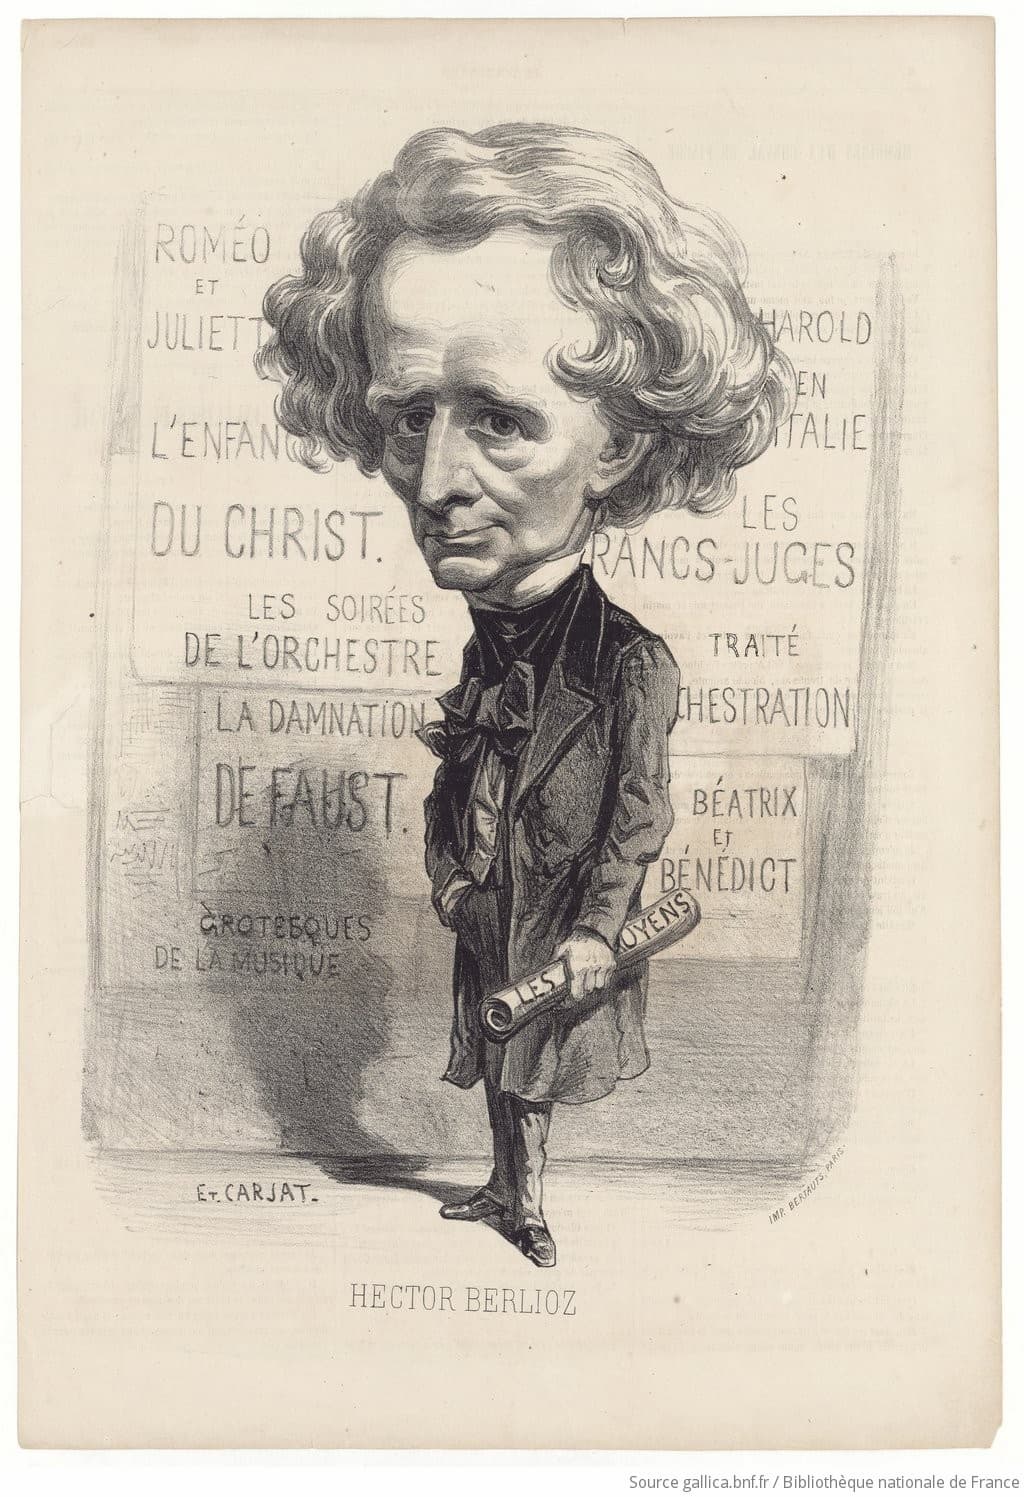 Carjat: Hector Berlioz, 1862 (Gallica, ark:/12148/btv1b8454326z)